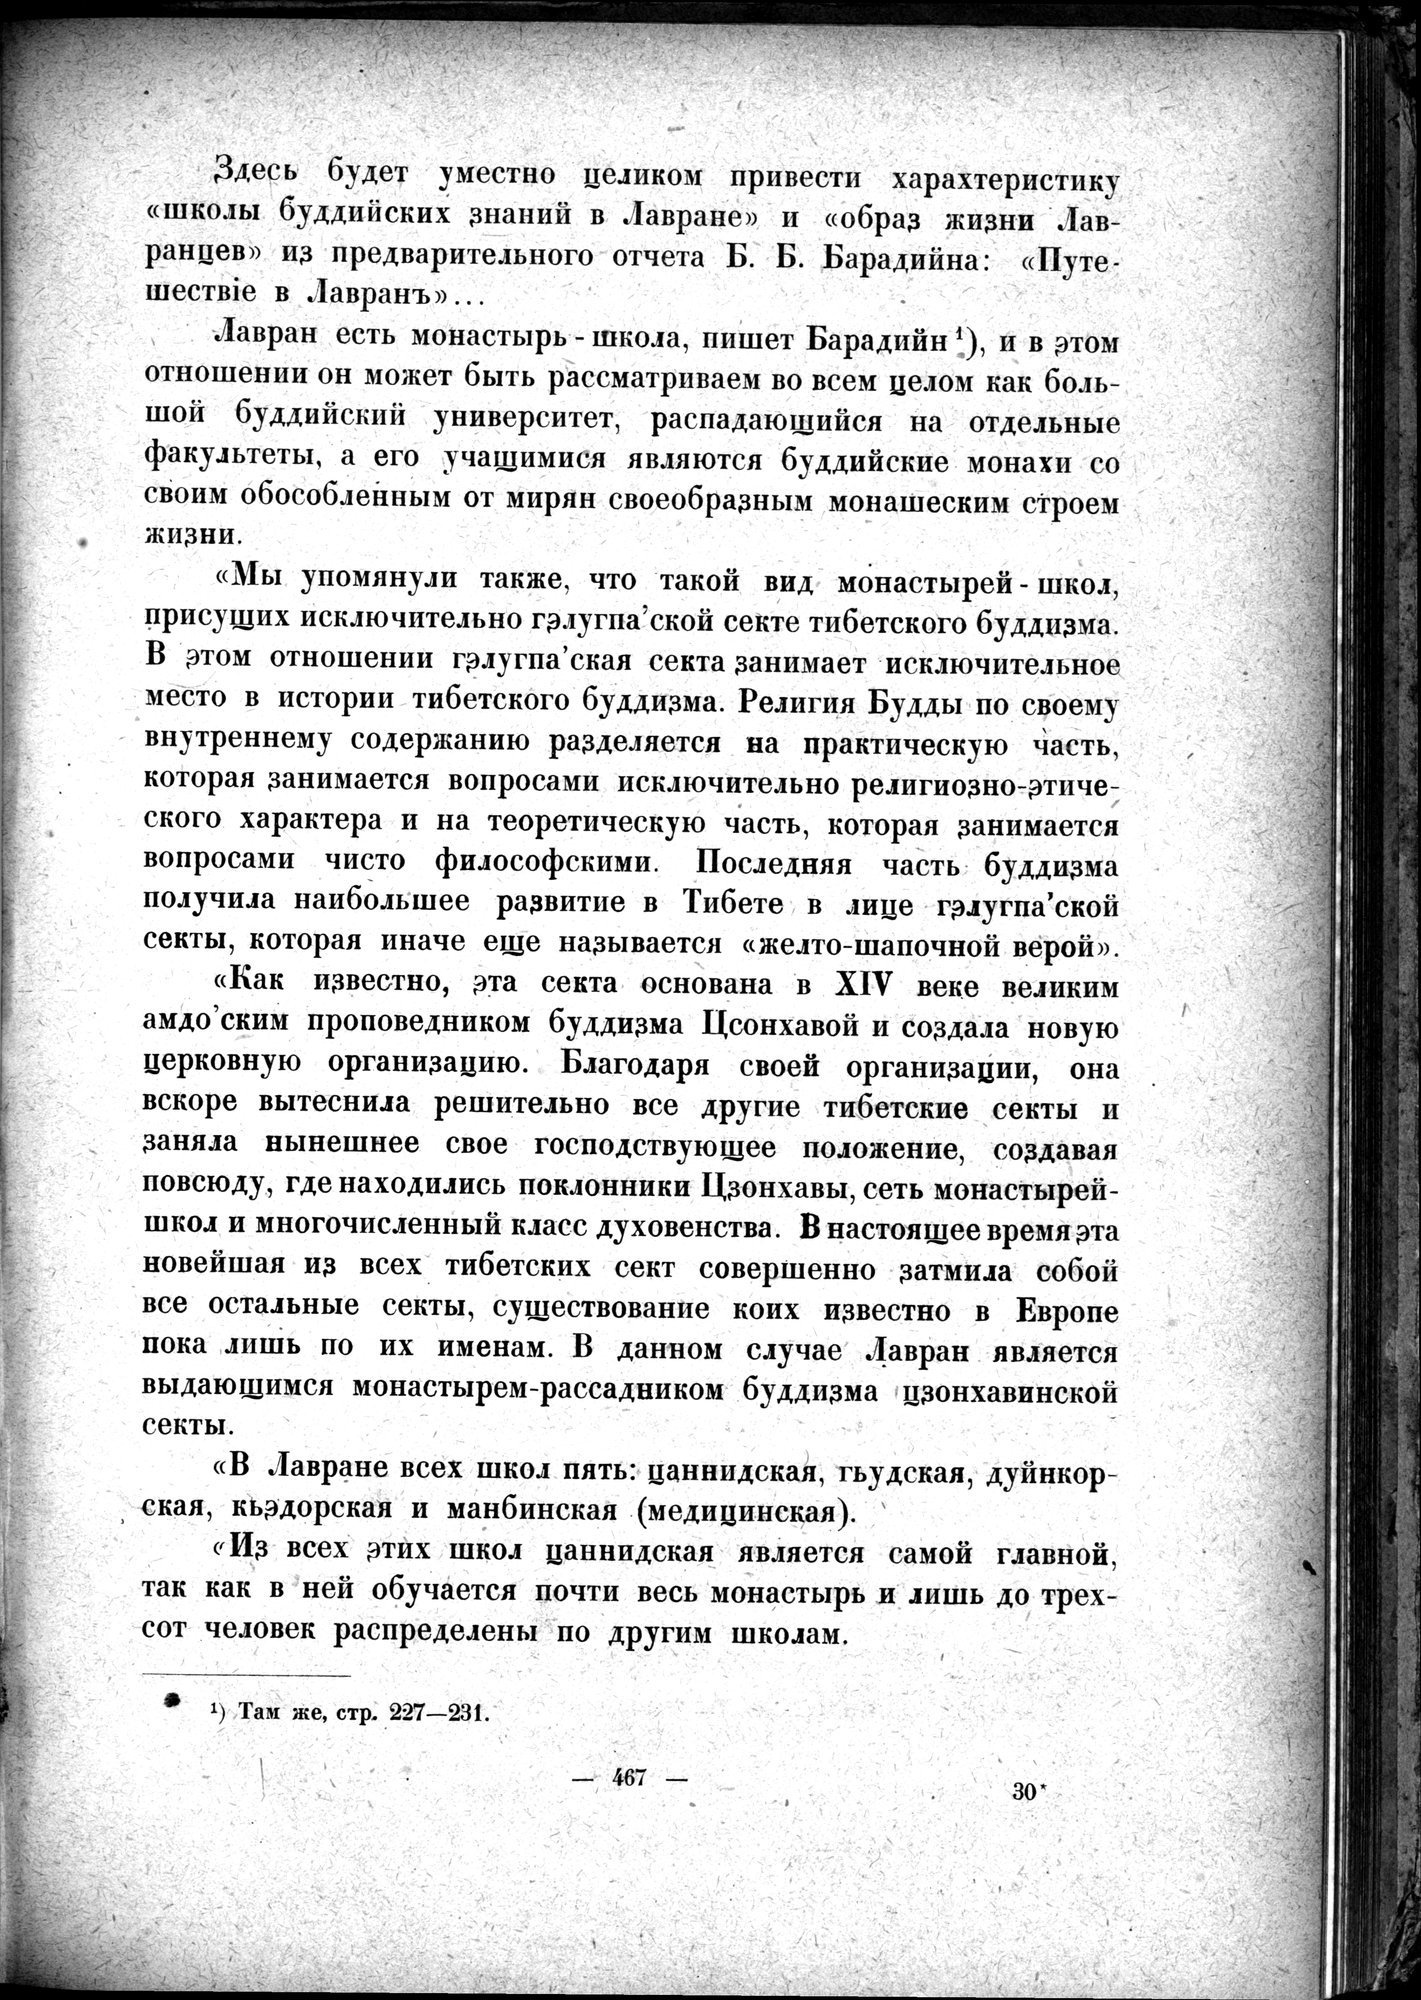 Mongoliya i Amdo i mertby gorod Khara-Khoto : vol.1 / Page 535 (Grayscale High Resolution Image)